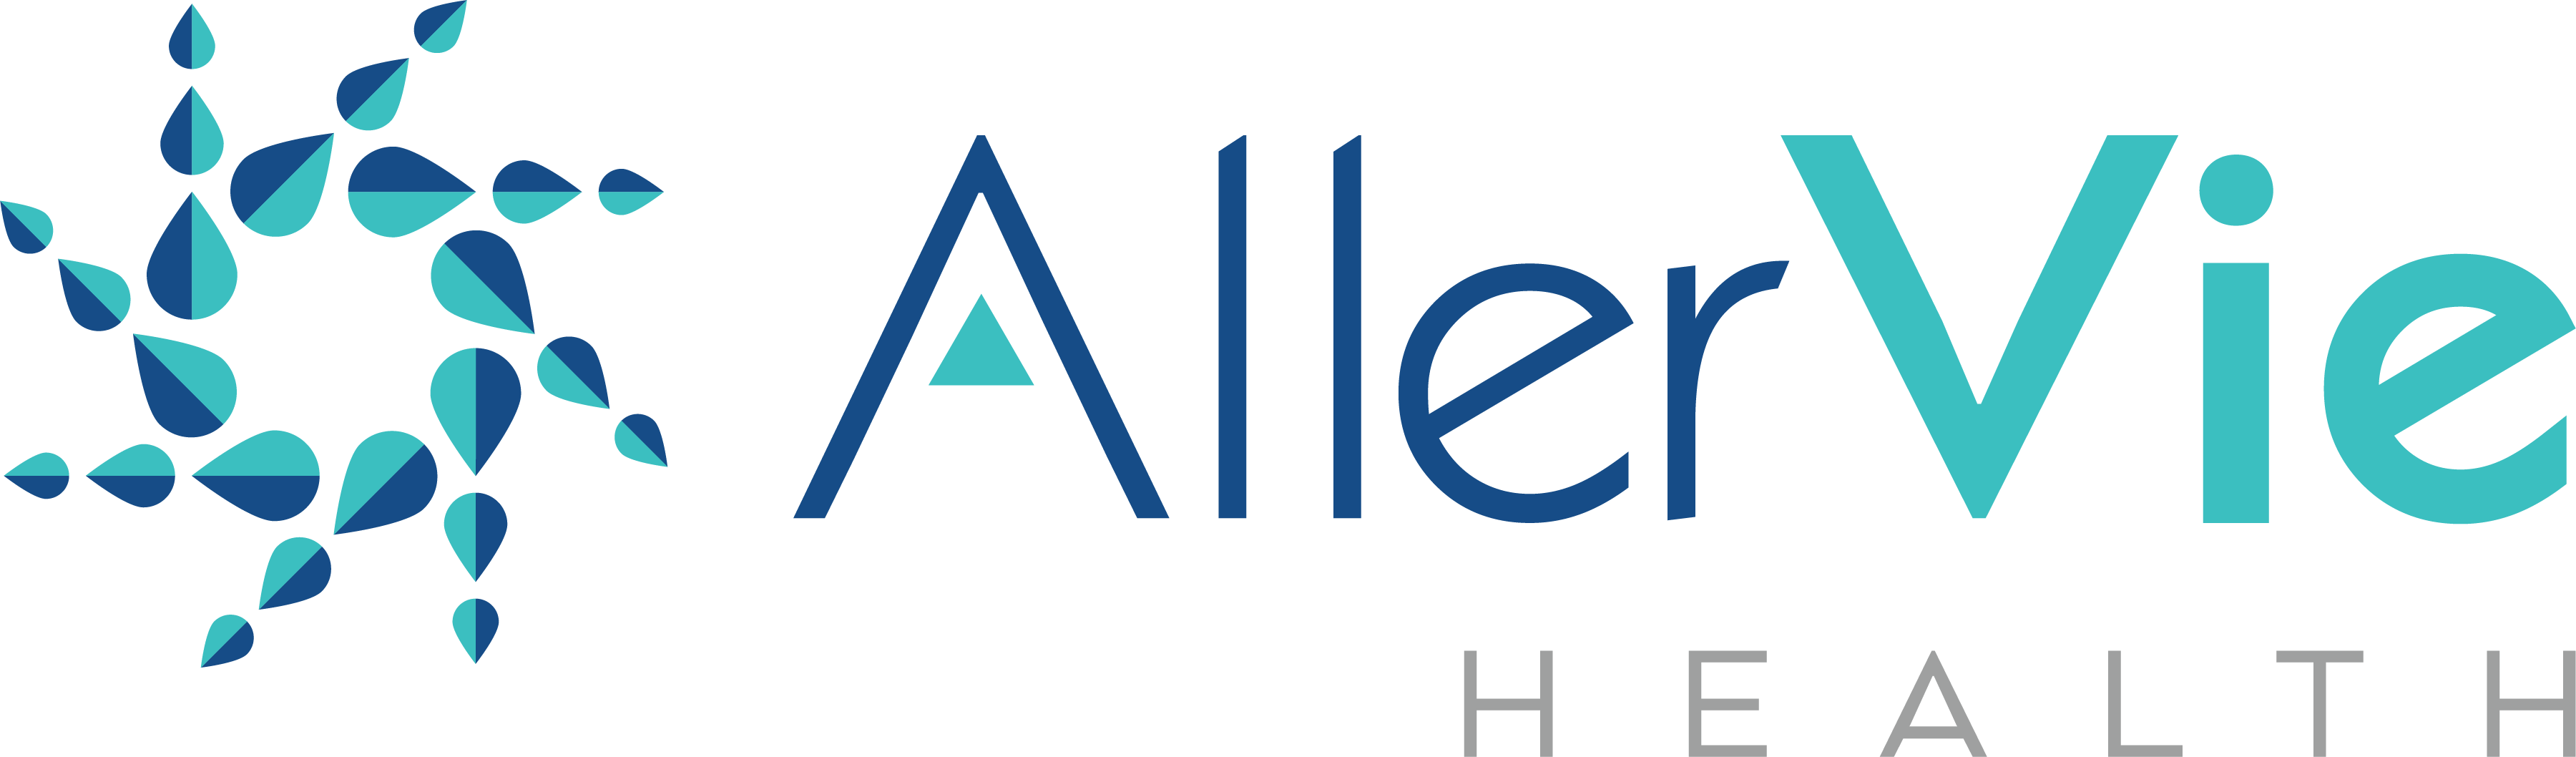 Virginia Allergy and Asthma Center Rebranding to AllerVie Health